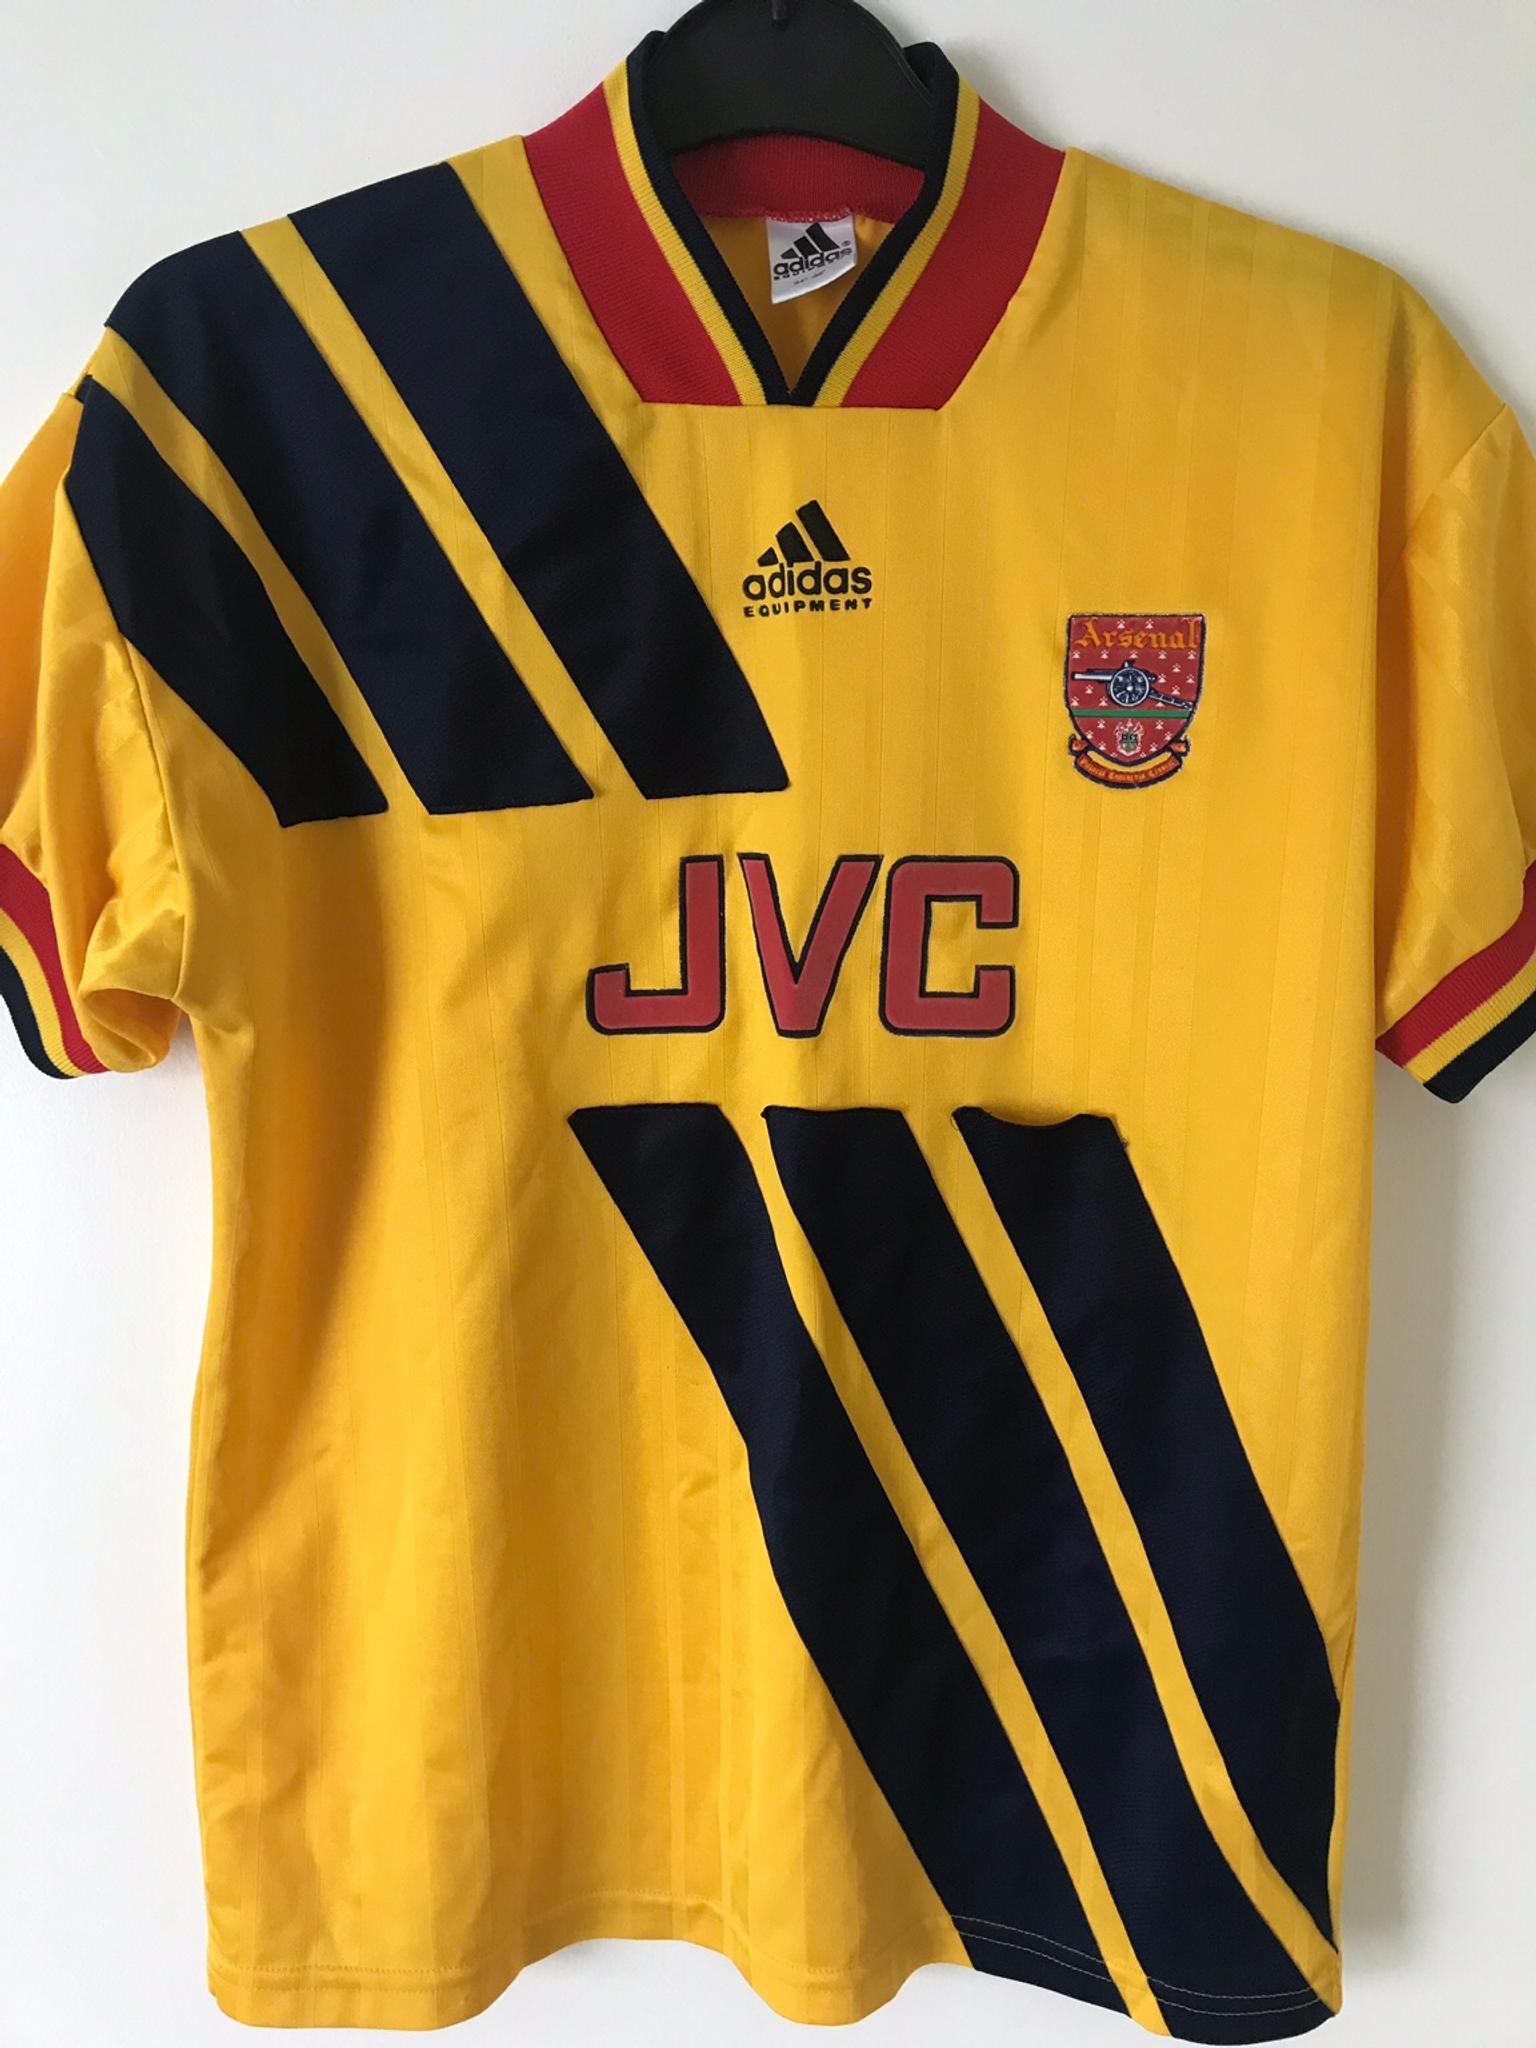 old arsenal yellow jersey